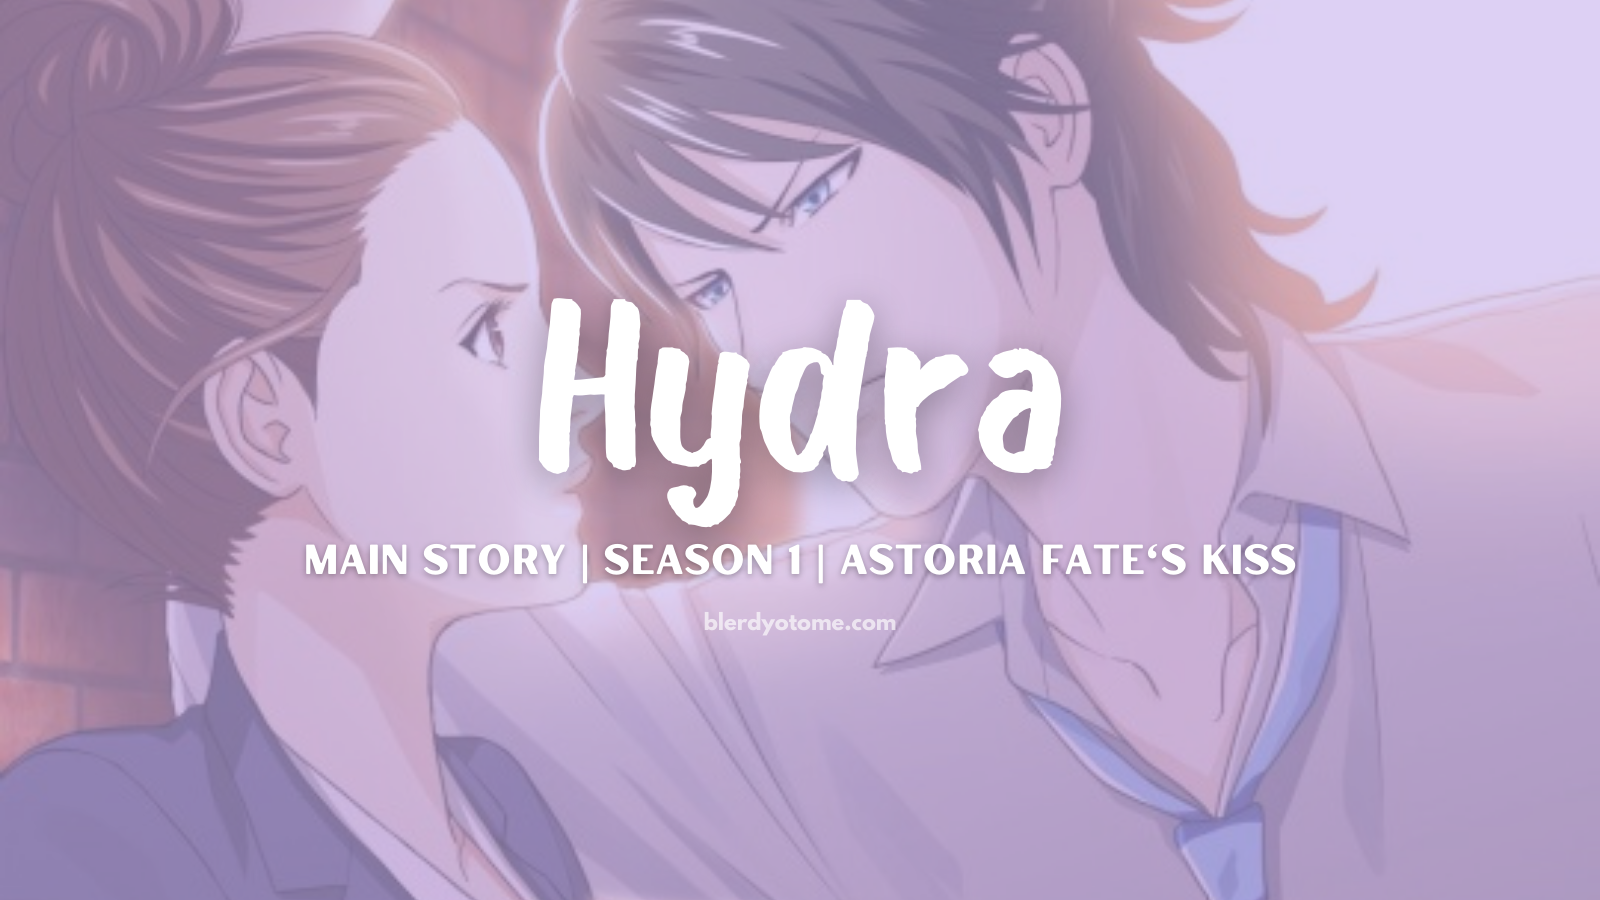 Astoria Fates Kiss Hydra Season 1